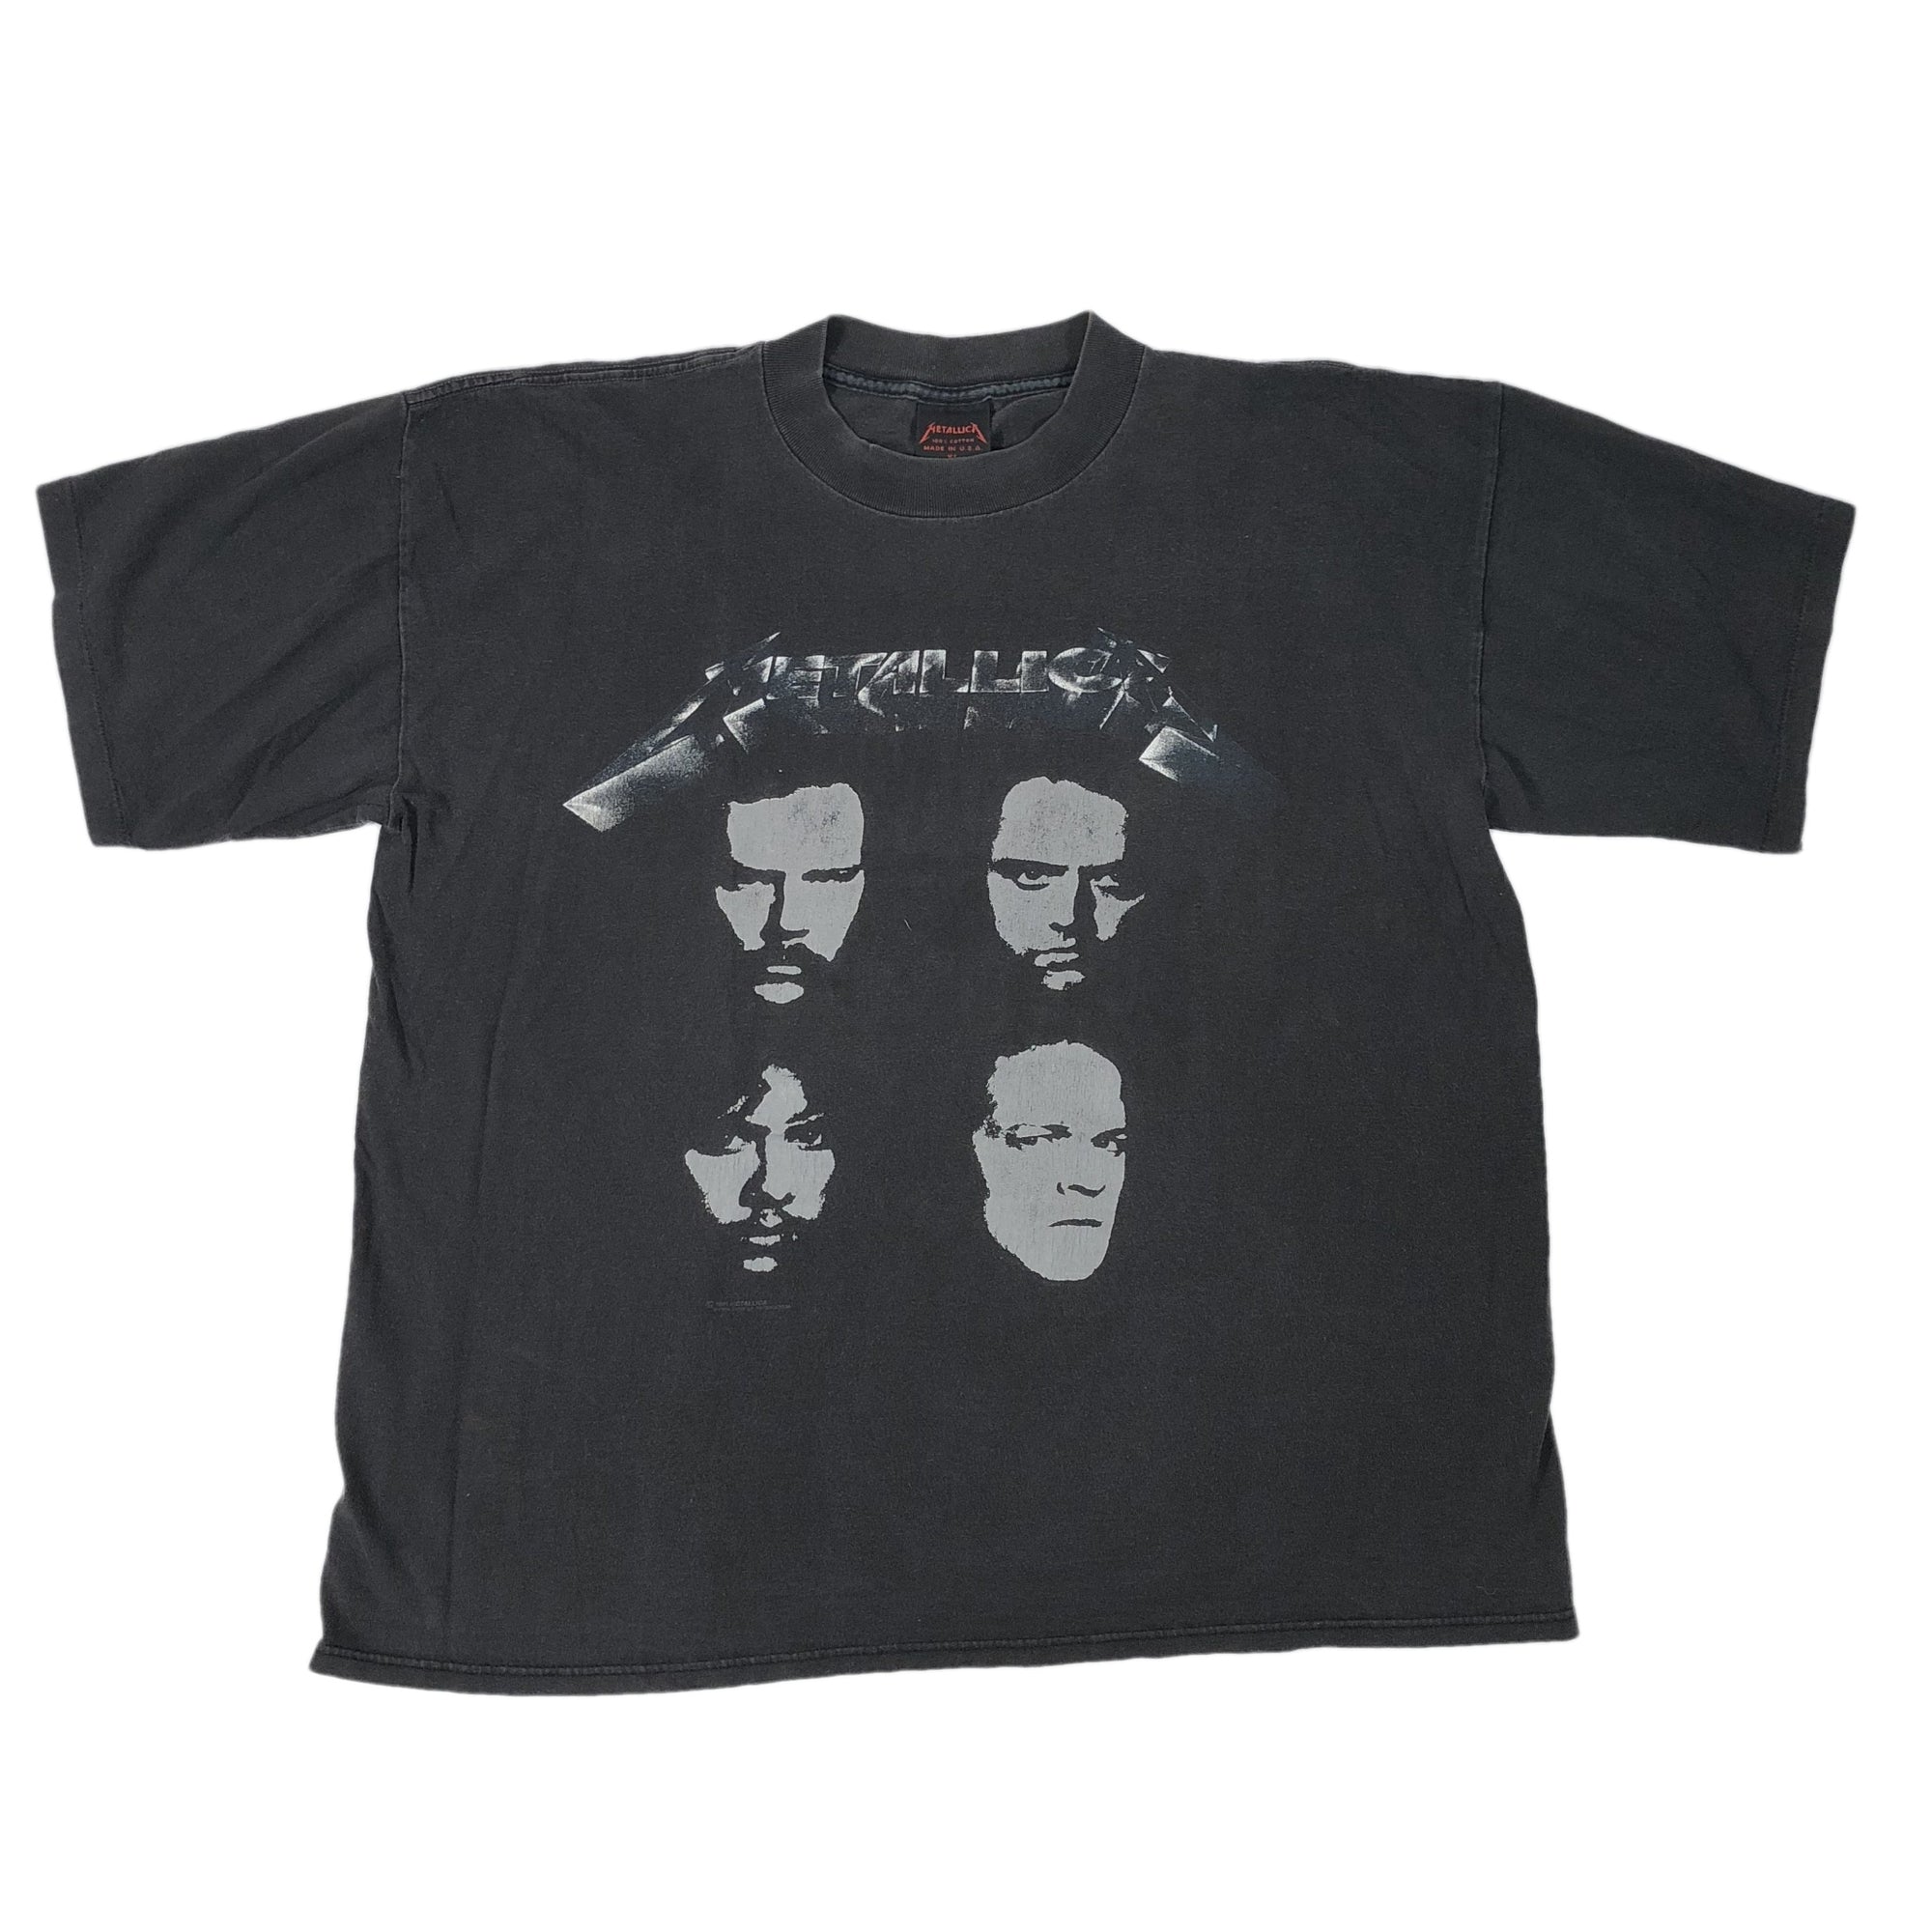 Vintage Metallica "Black Album Faces" T-Shirt - jointcustodydc